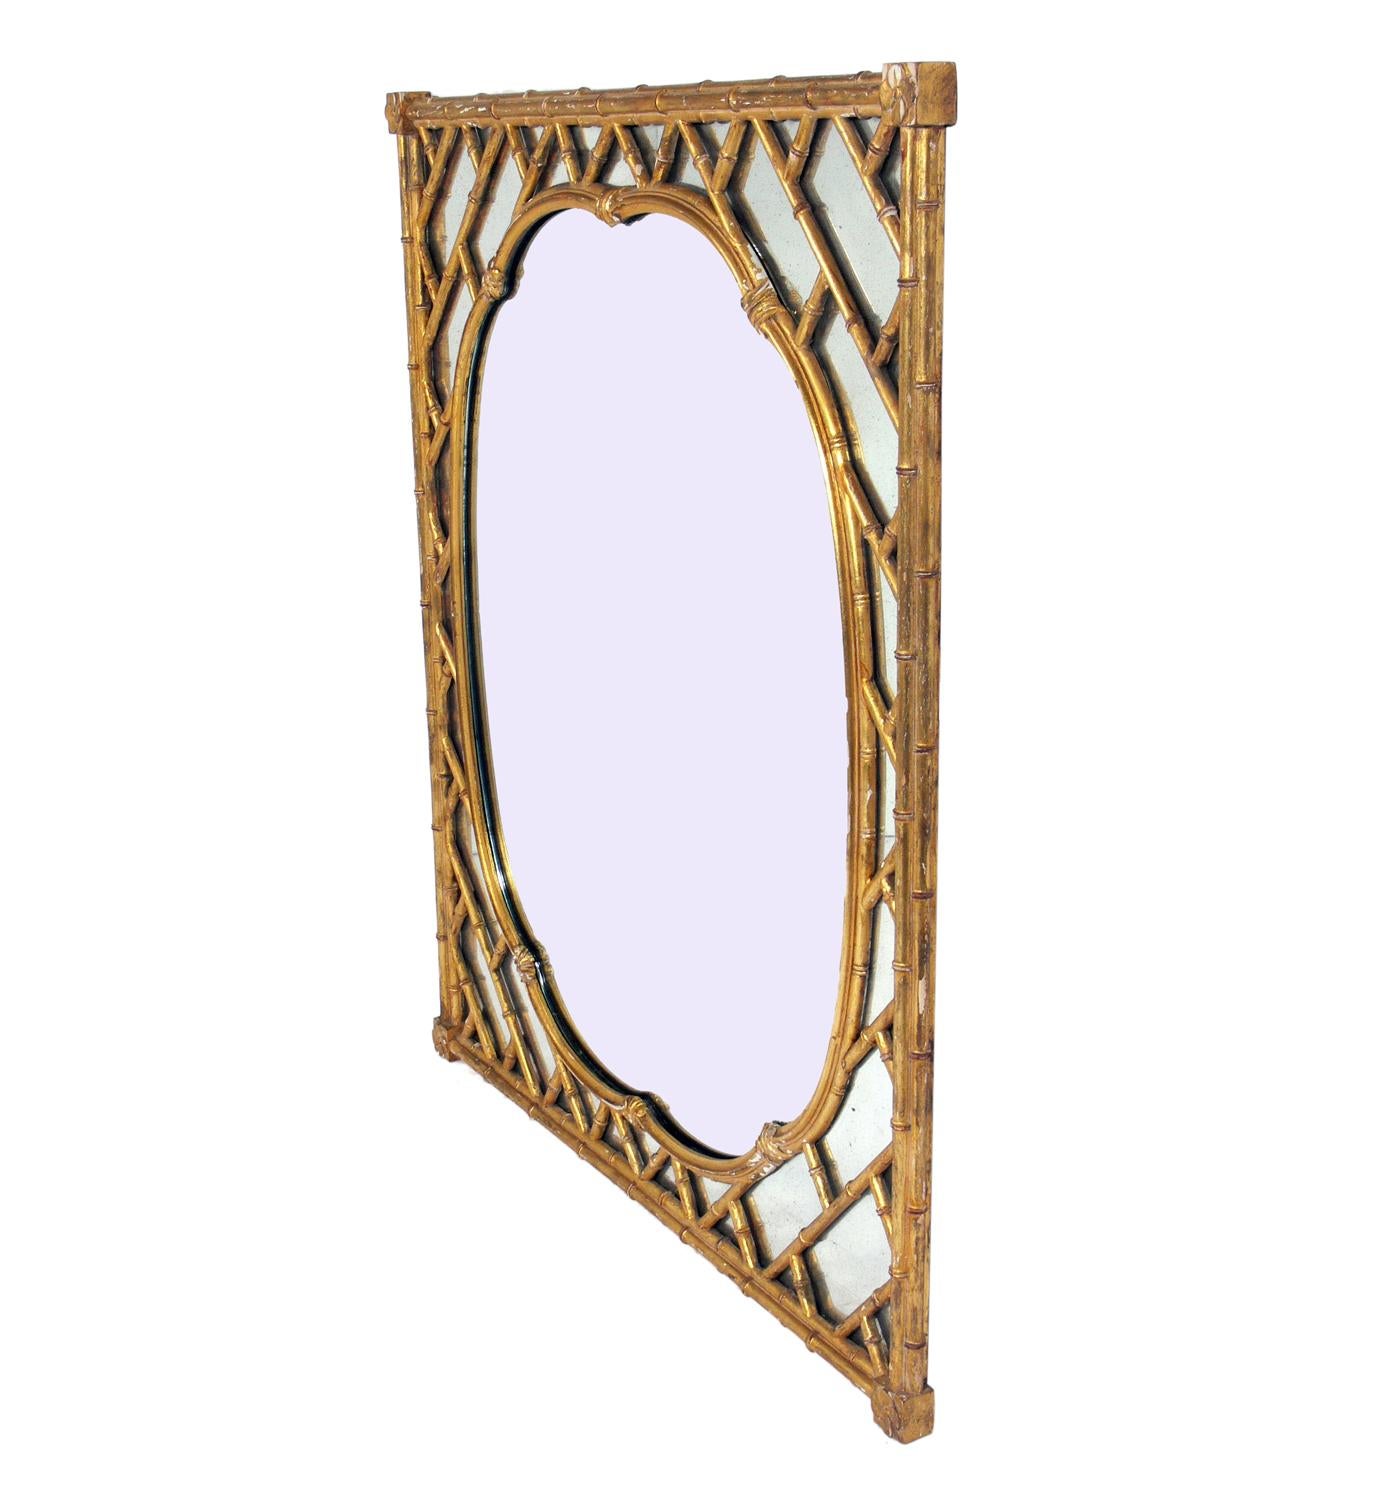 Glamorous gilt faux bamboo mirror, American, circa 1940s.